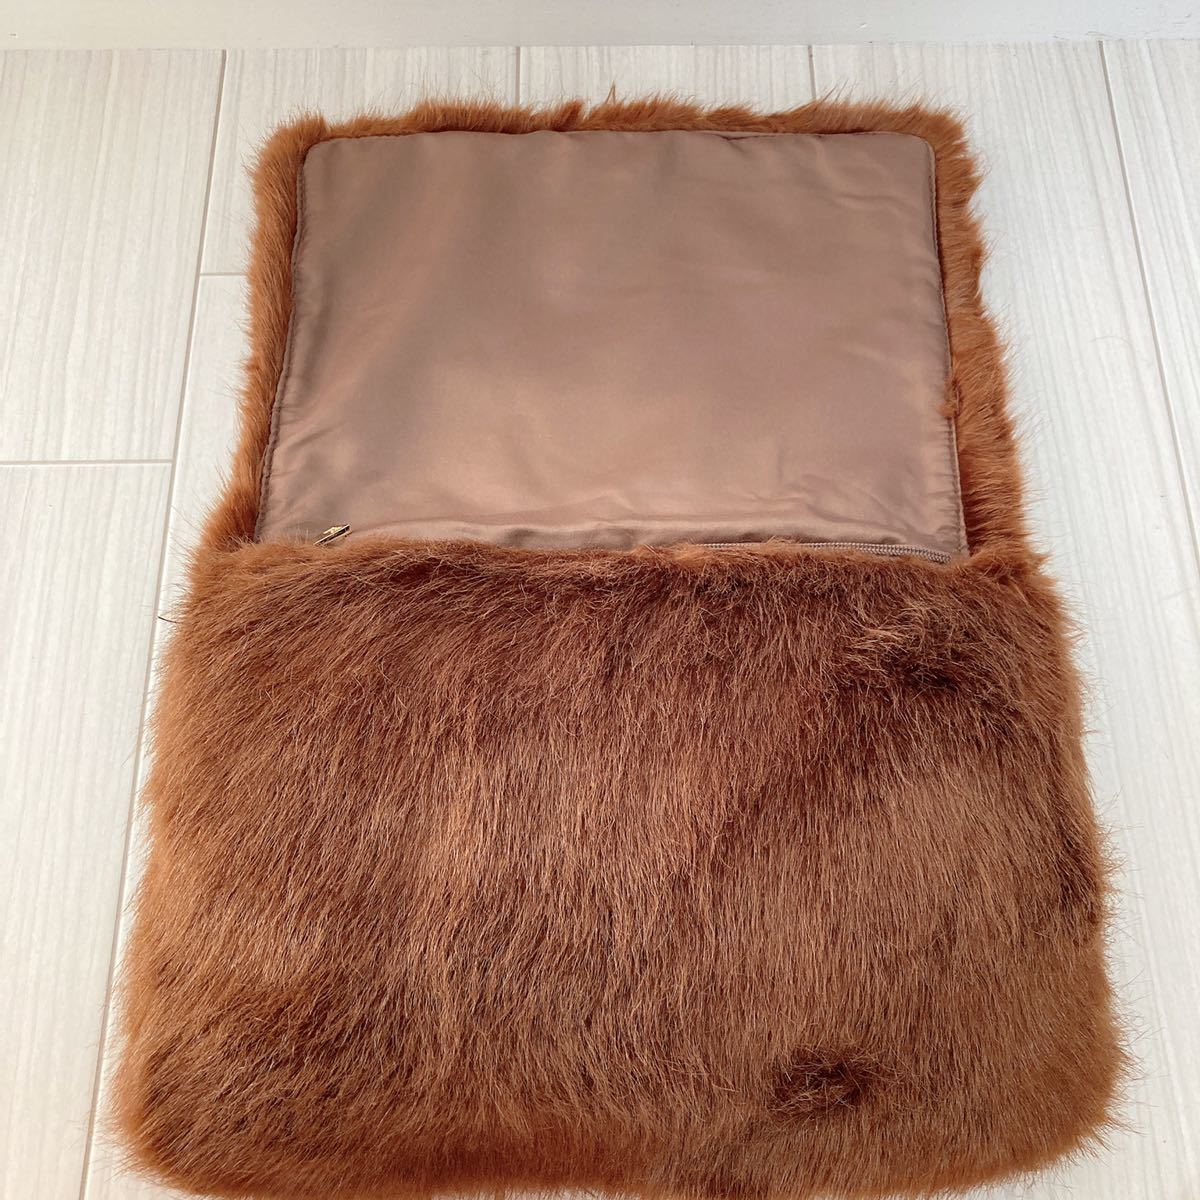  new goods unused Cecil McBee lady's party bag clutch bag handbag fur fake fur tea color Brown plain simple 